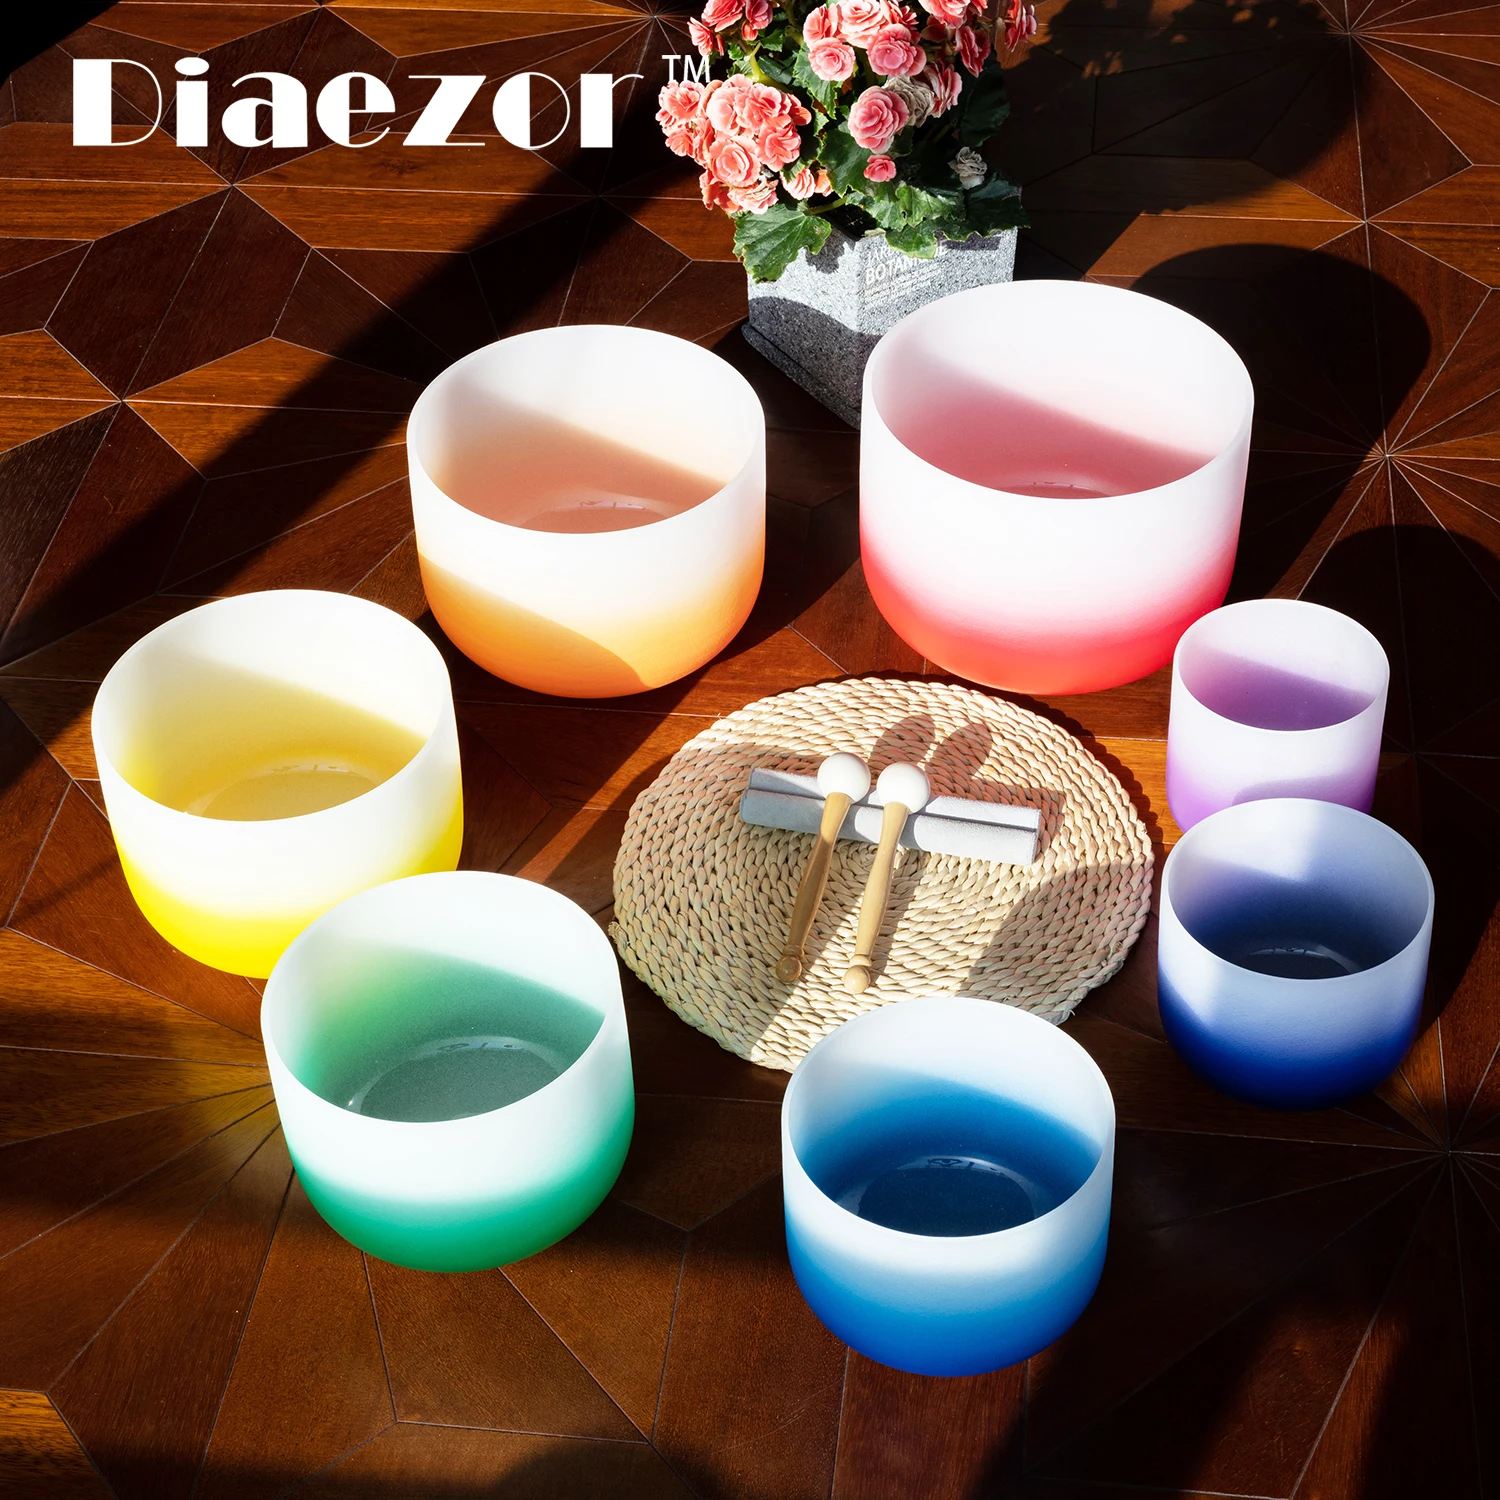 

Diaezor 6-12 Inch 7 Pcs Half Color Aria Gradient Design Crystal Singing Bowl Chakra For Sound Healing Meditation With Bag